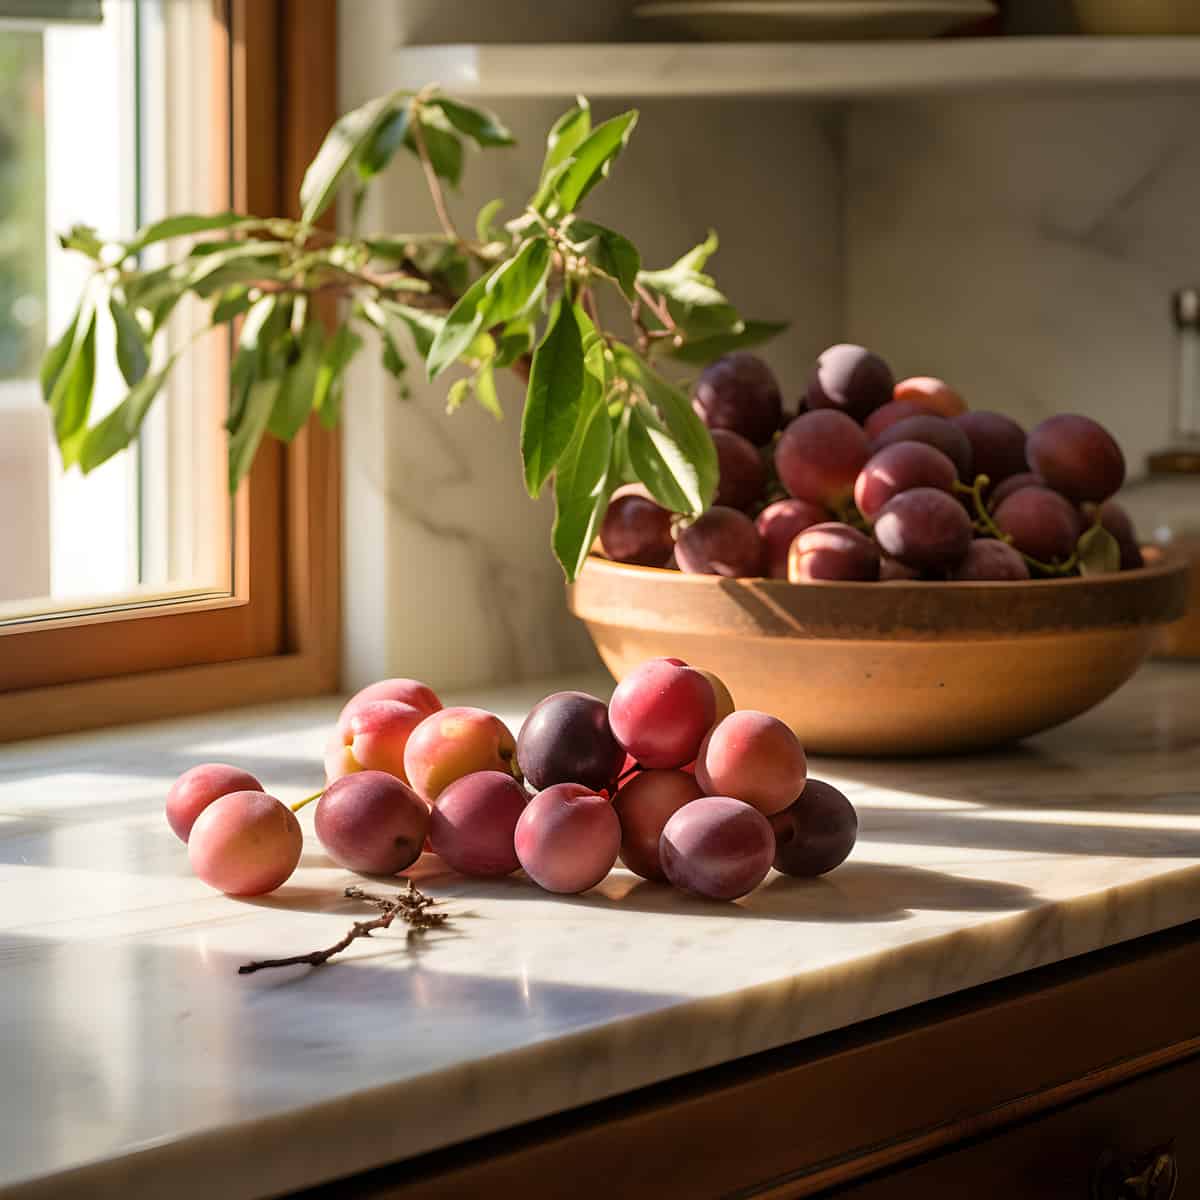 Prunus Brachypetala on a kitchen counter